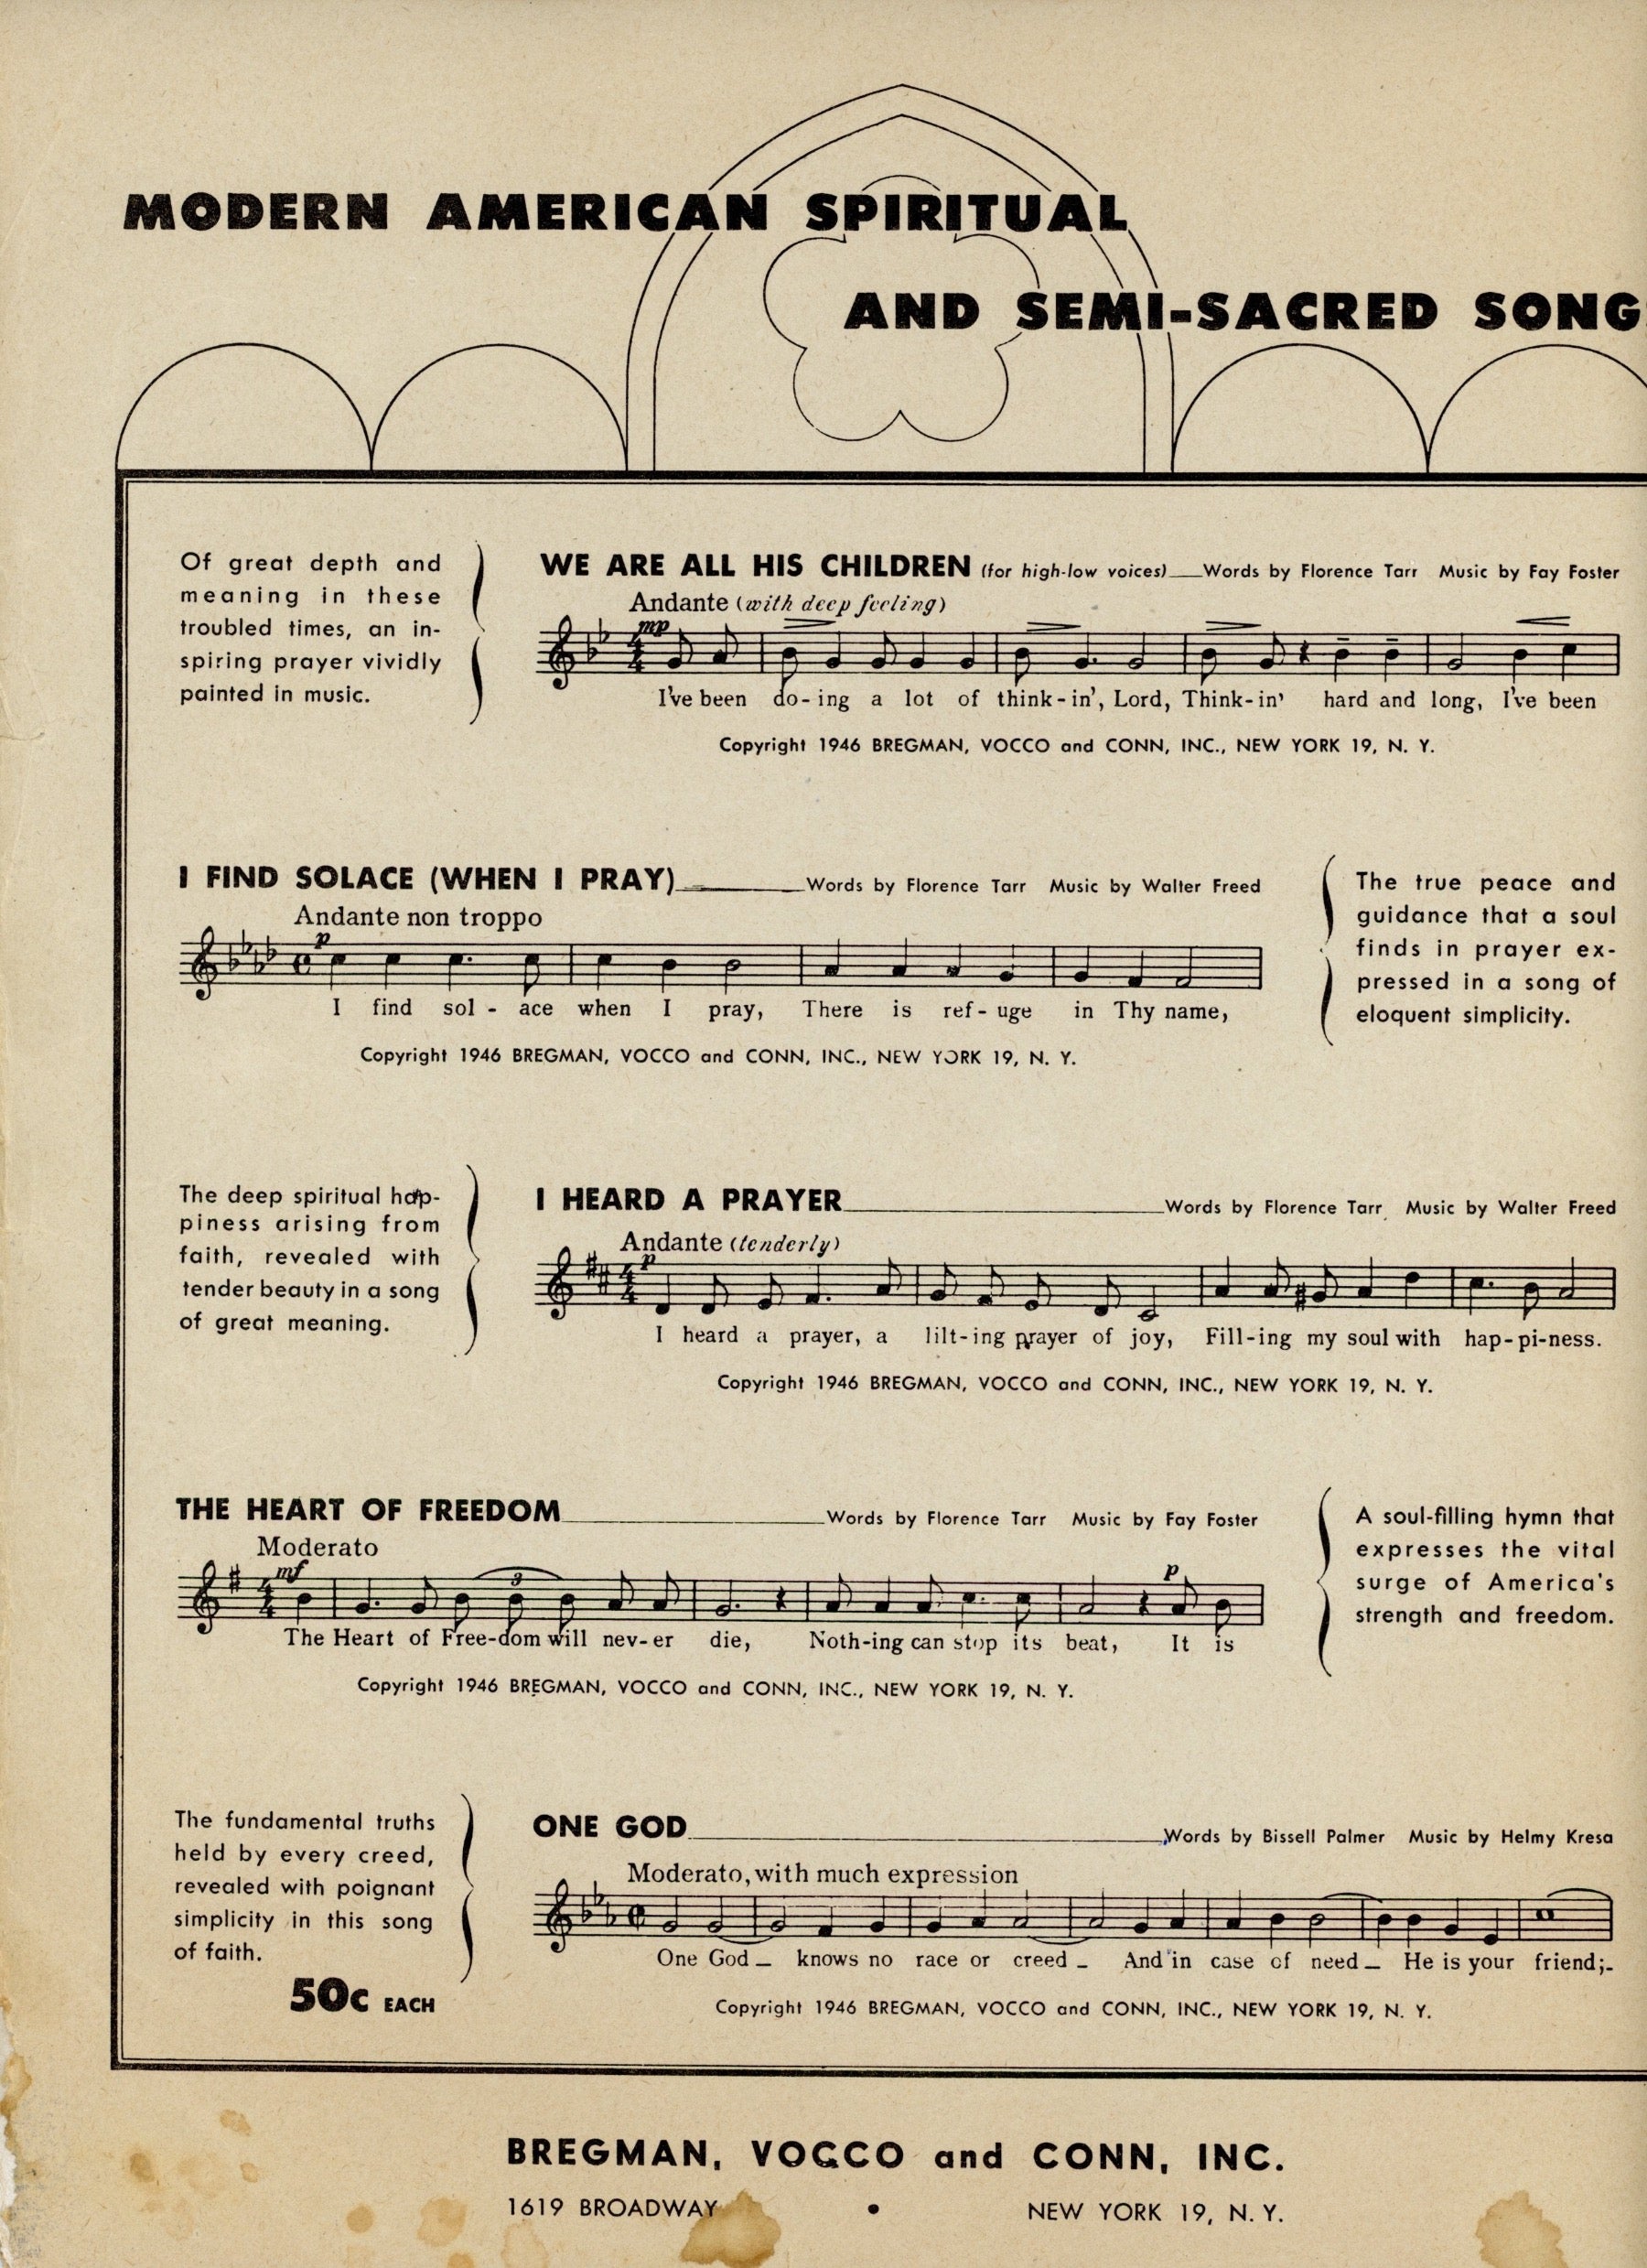 WINTER WONDERLAND Vintage Sheet Music by DIck Smith and Felix Bernard ©1934